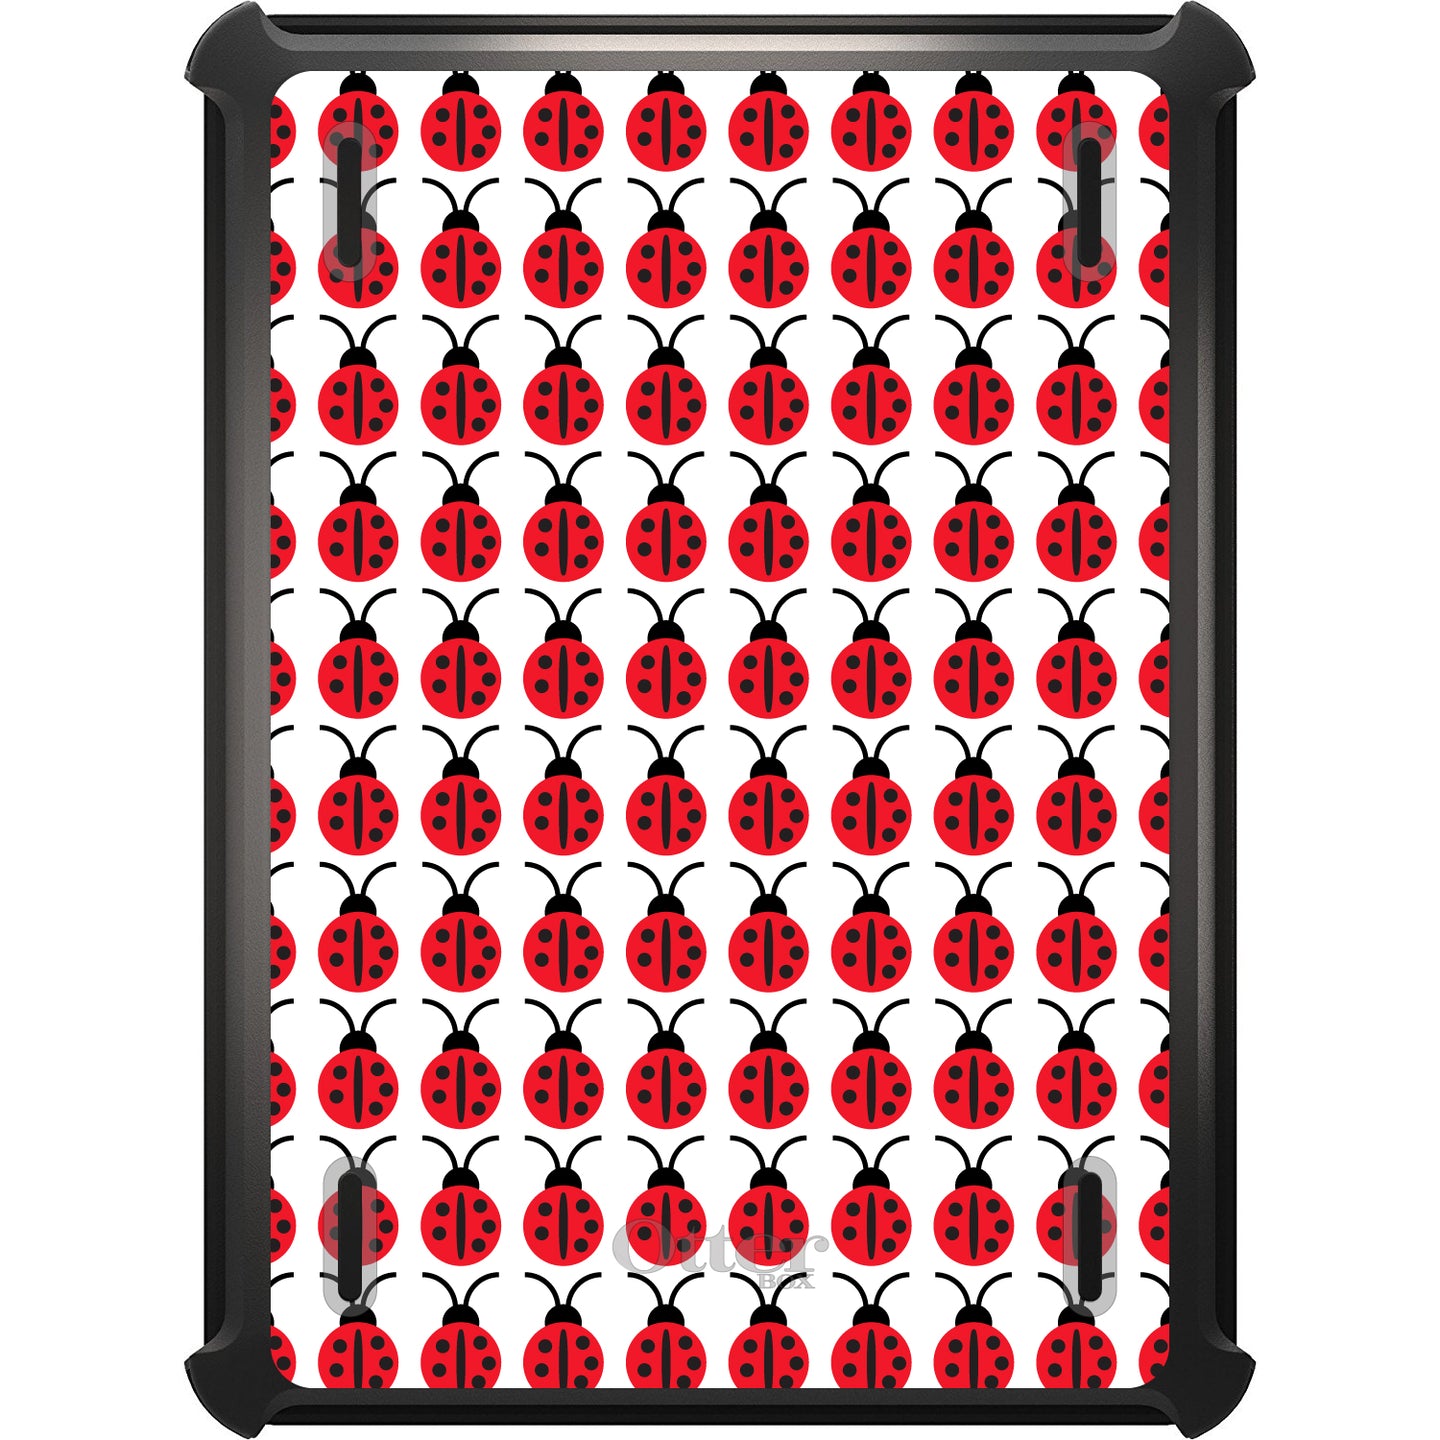 DistinctInk™ OtterBox Defender Series Case for Apple iPad / iPad Pro / iPad Air / iPad Mini - Red White Black Lady Bugs